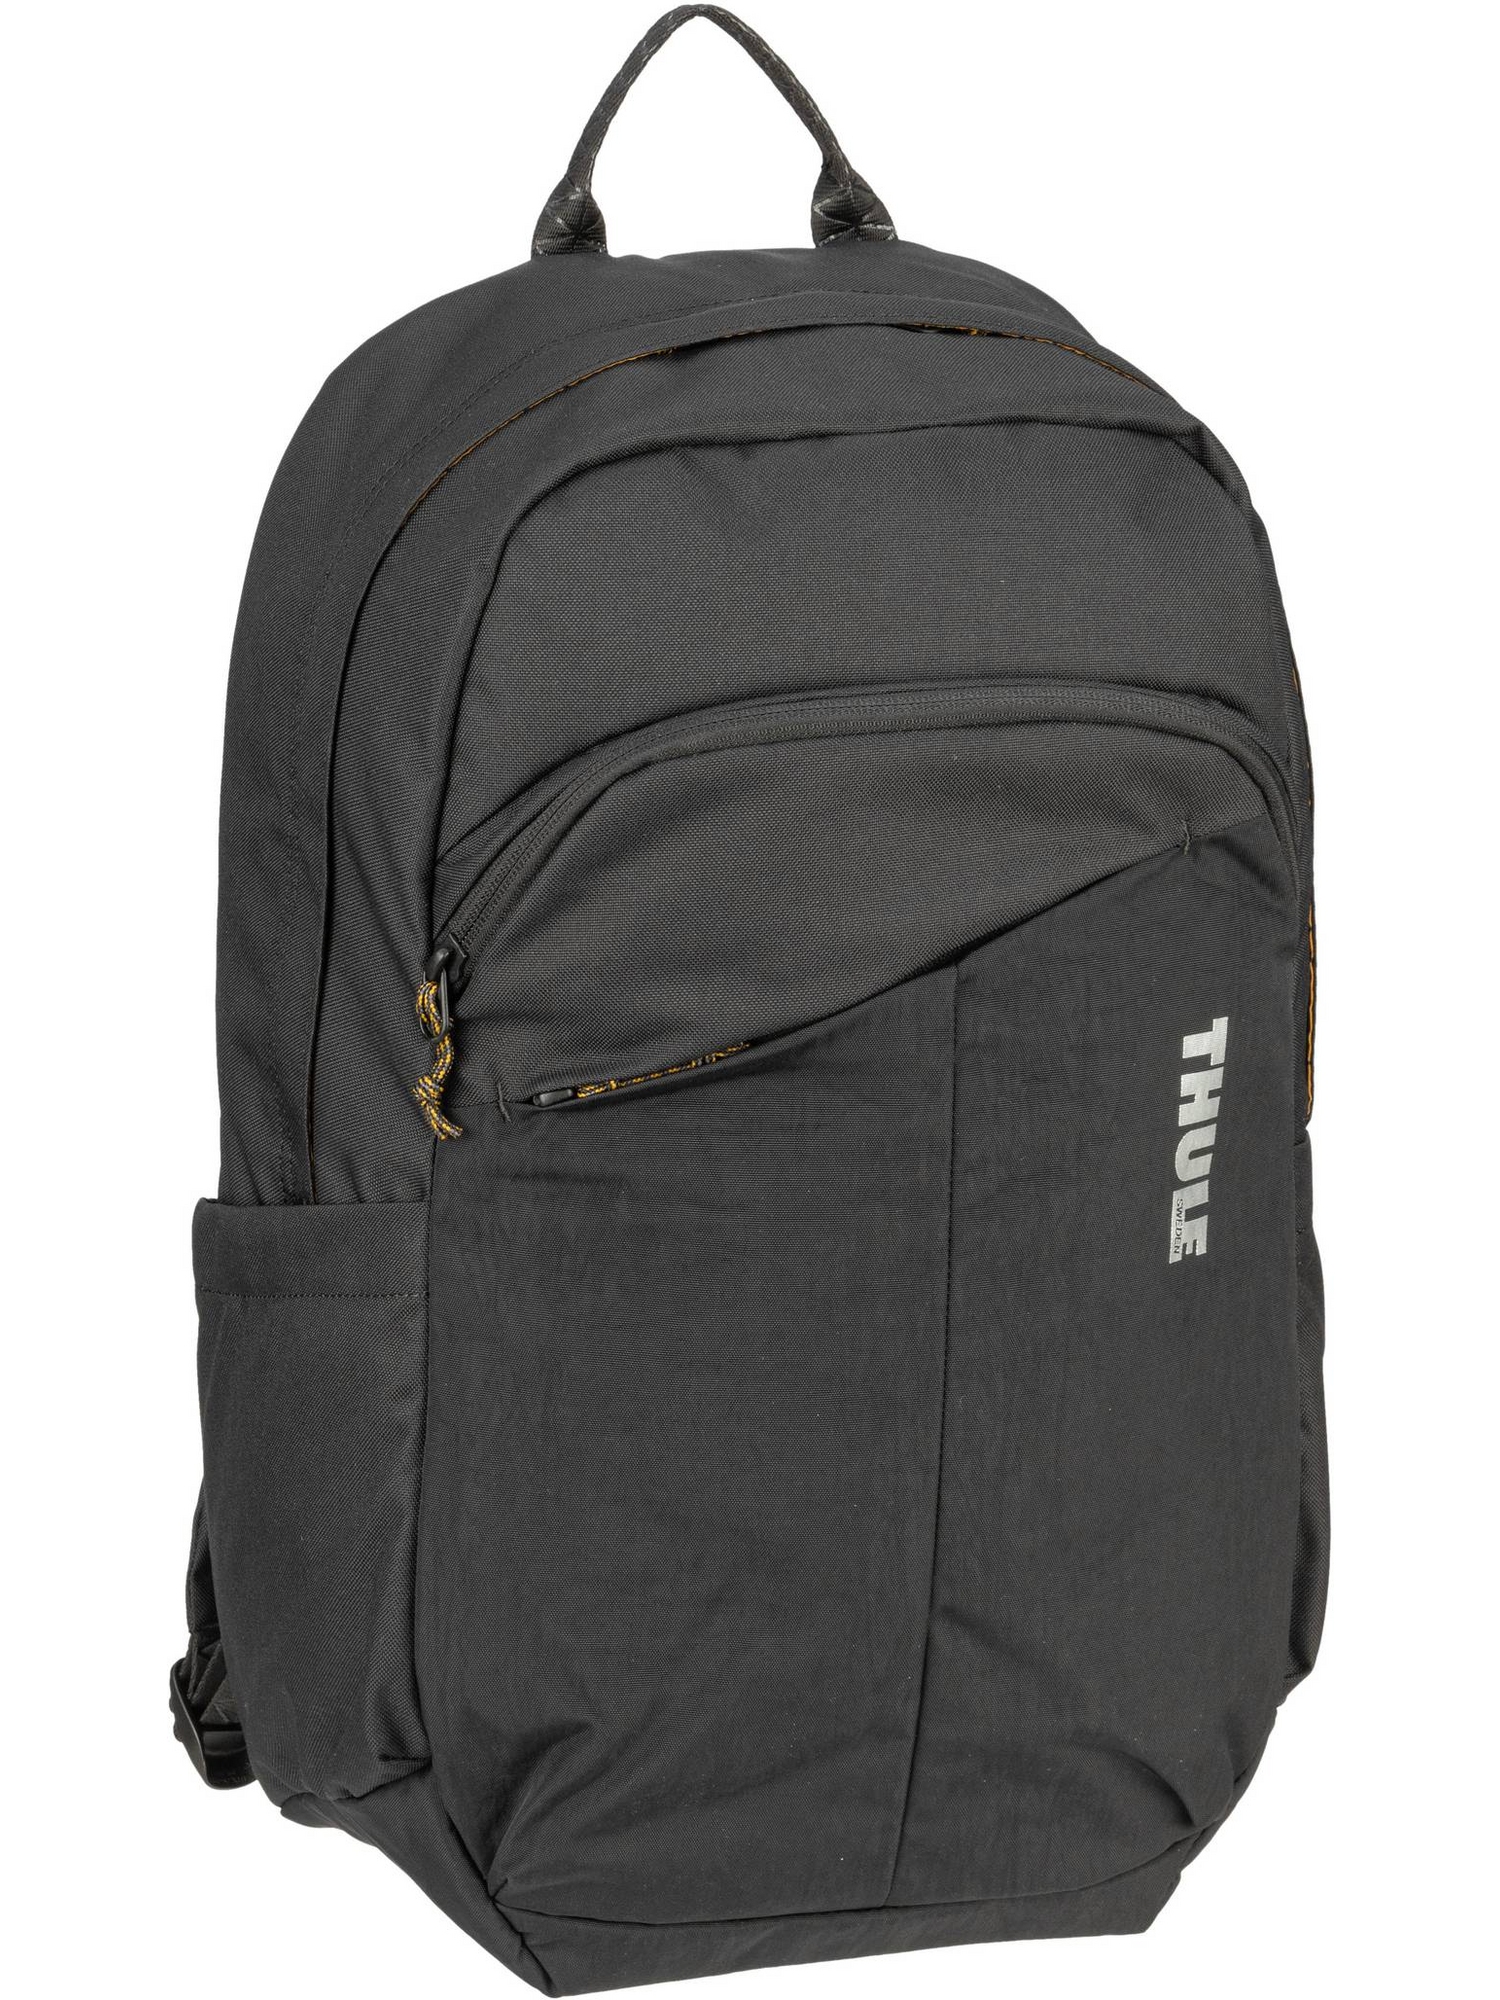 Рюкзак Thule/Backpack Indago Backpack 23L, черный рюкзак thule backpack enroute backpack 26l черный